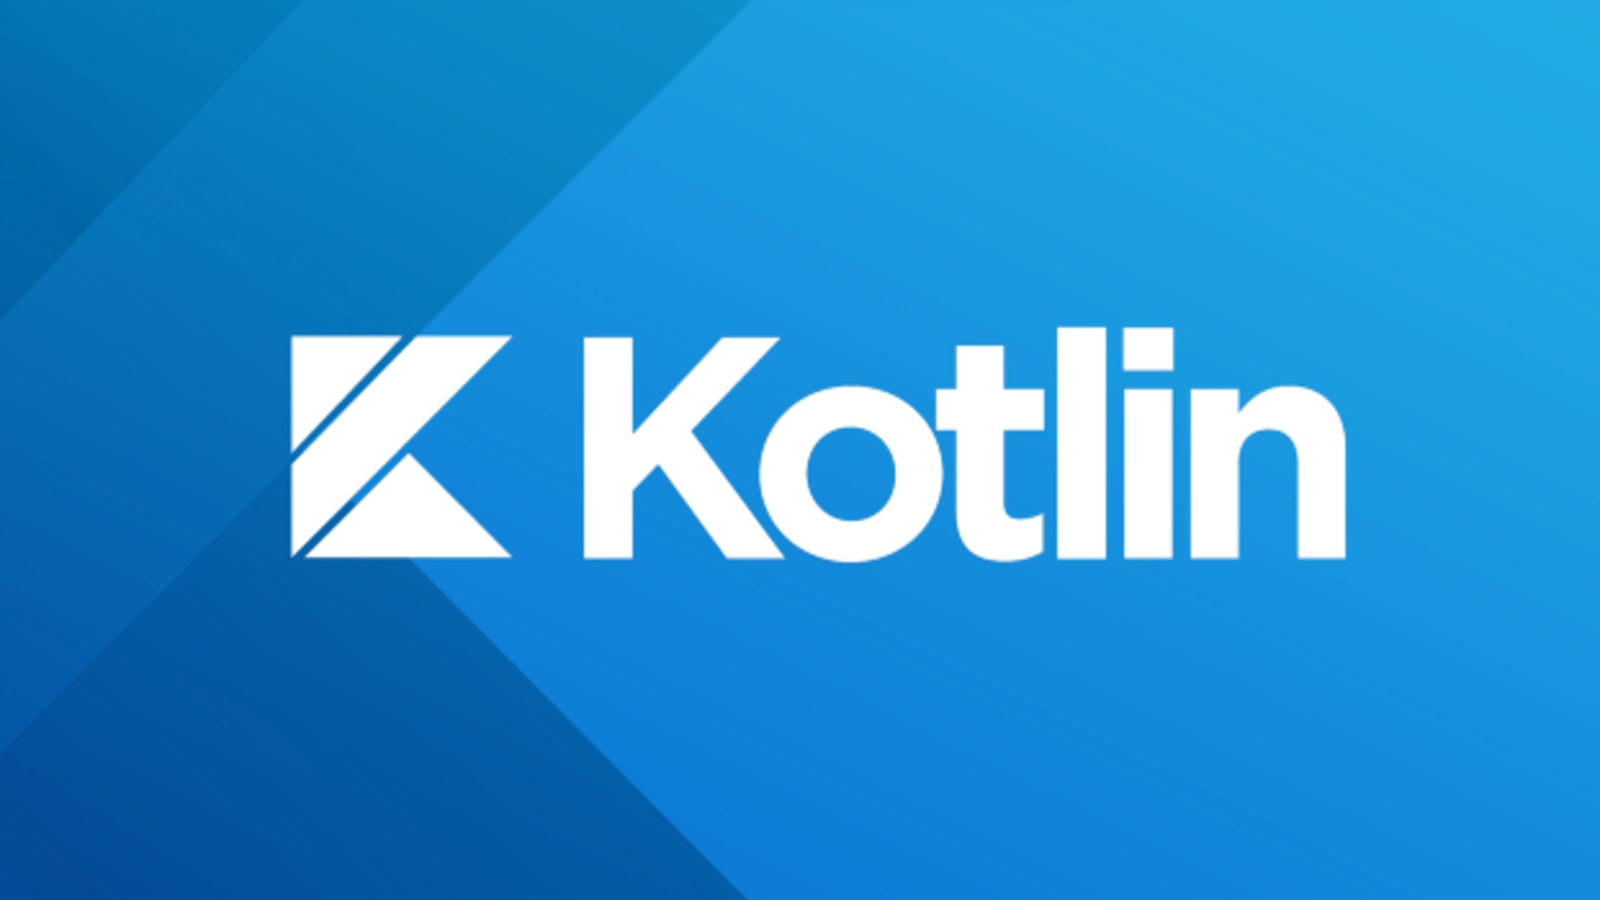 Download wallpapers Kotlin glitter logo programming language grid metal  background Kotlin creative programming language signs Kotlin logo for  desktop free Pictures for desktop free